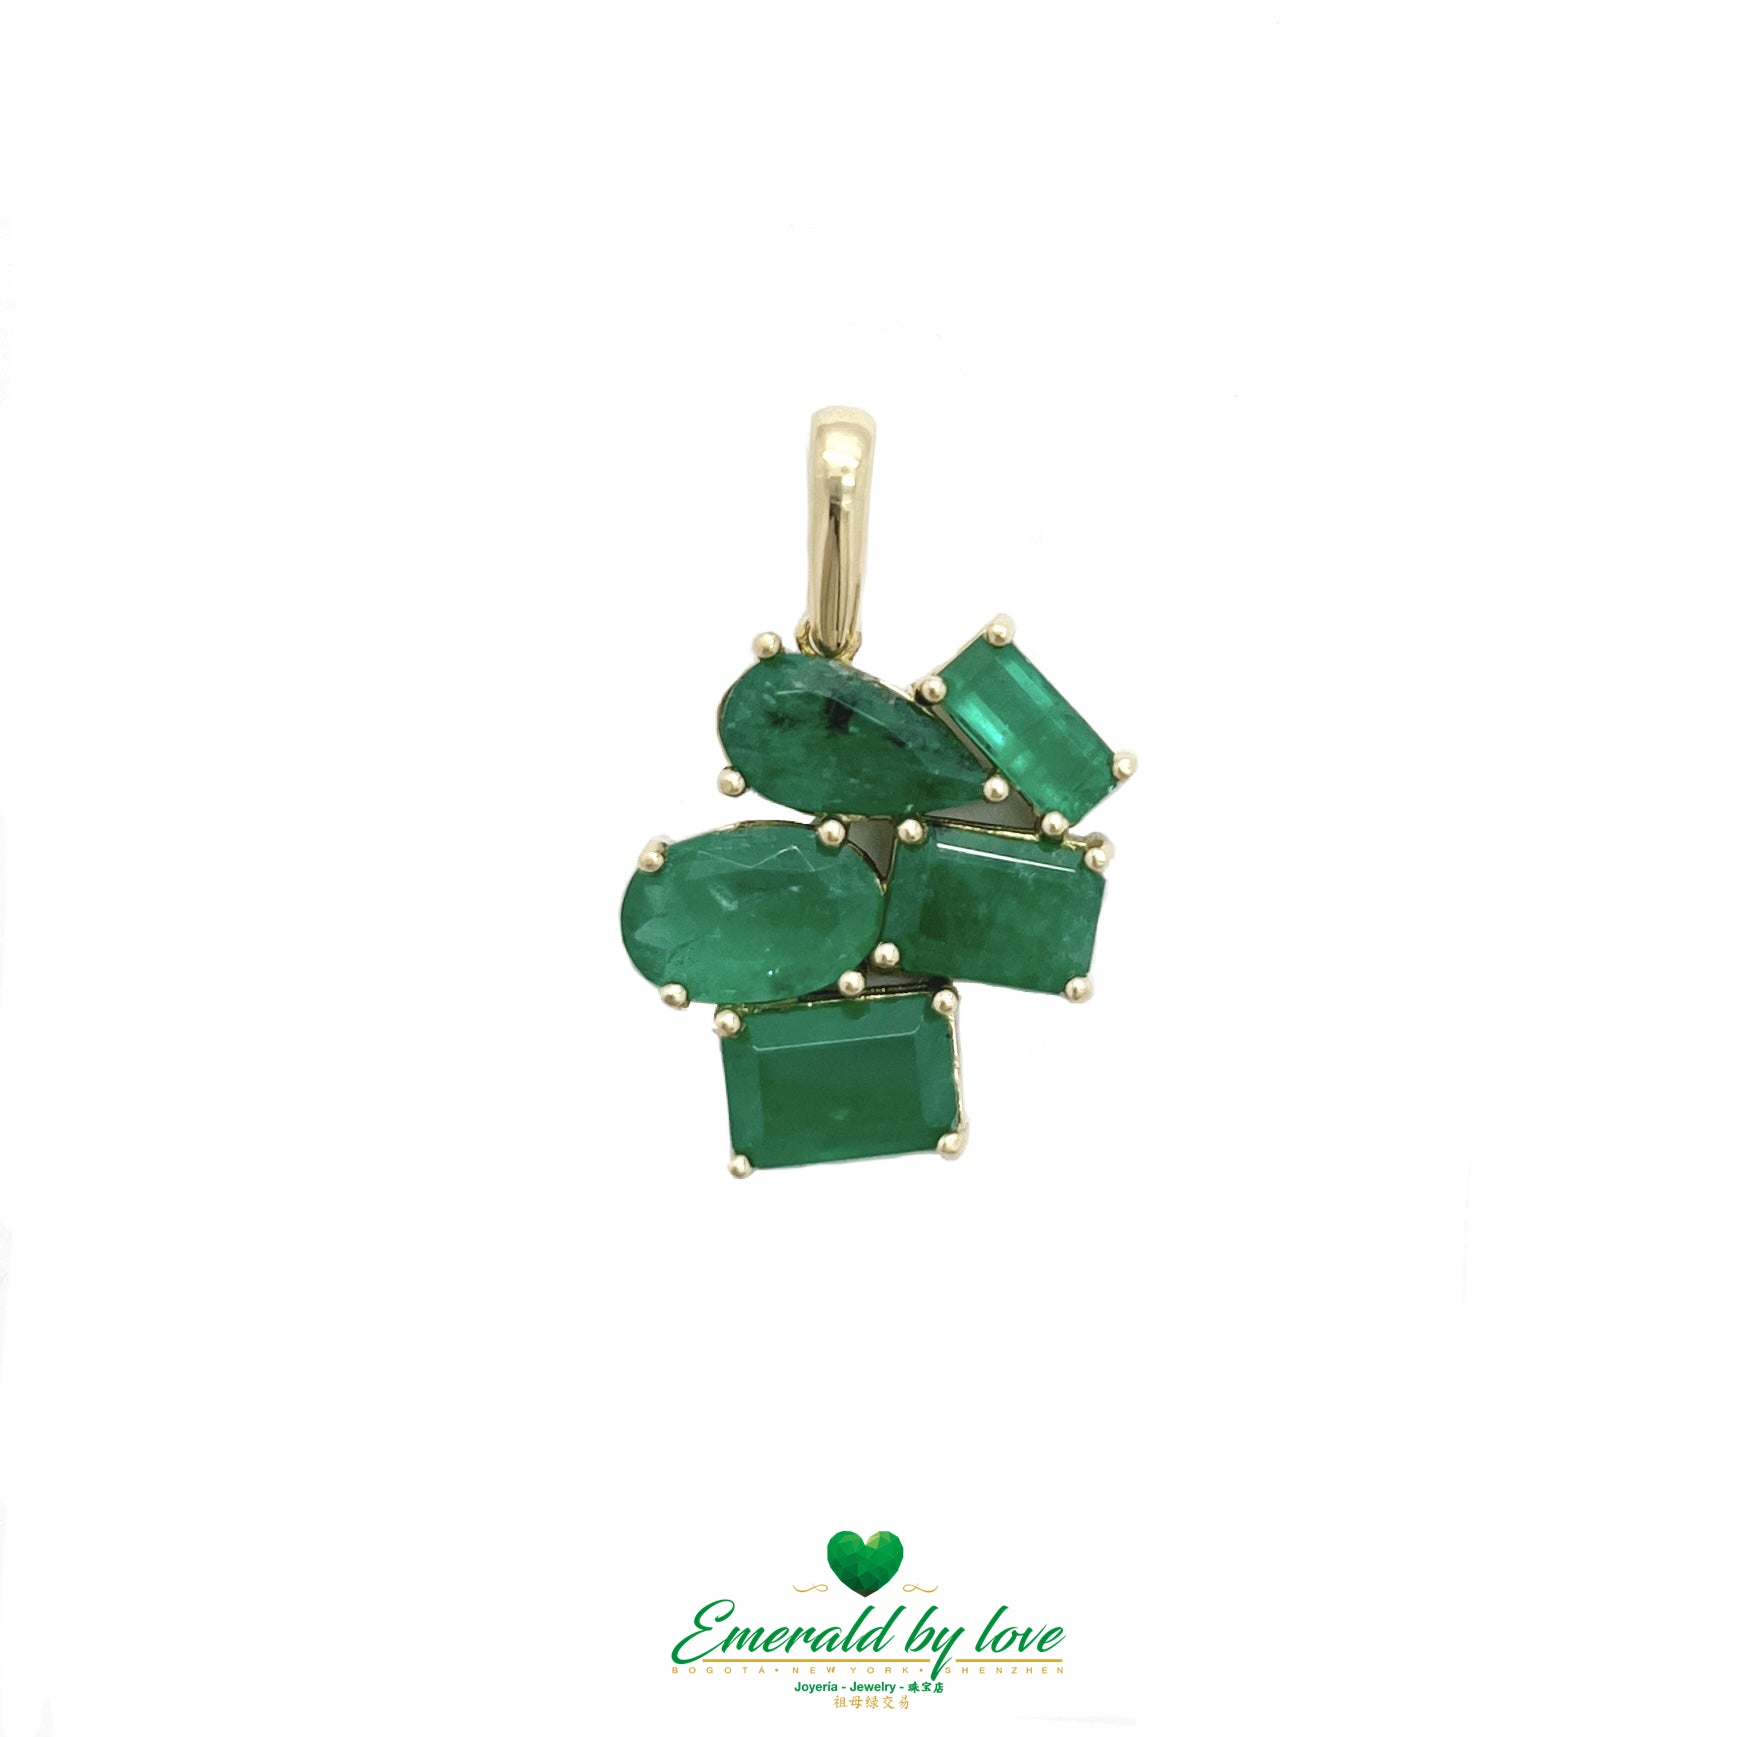 Versatile 18k Yellow Gold Pendant with 4.92 ct Multishaped Emeralds